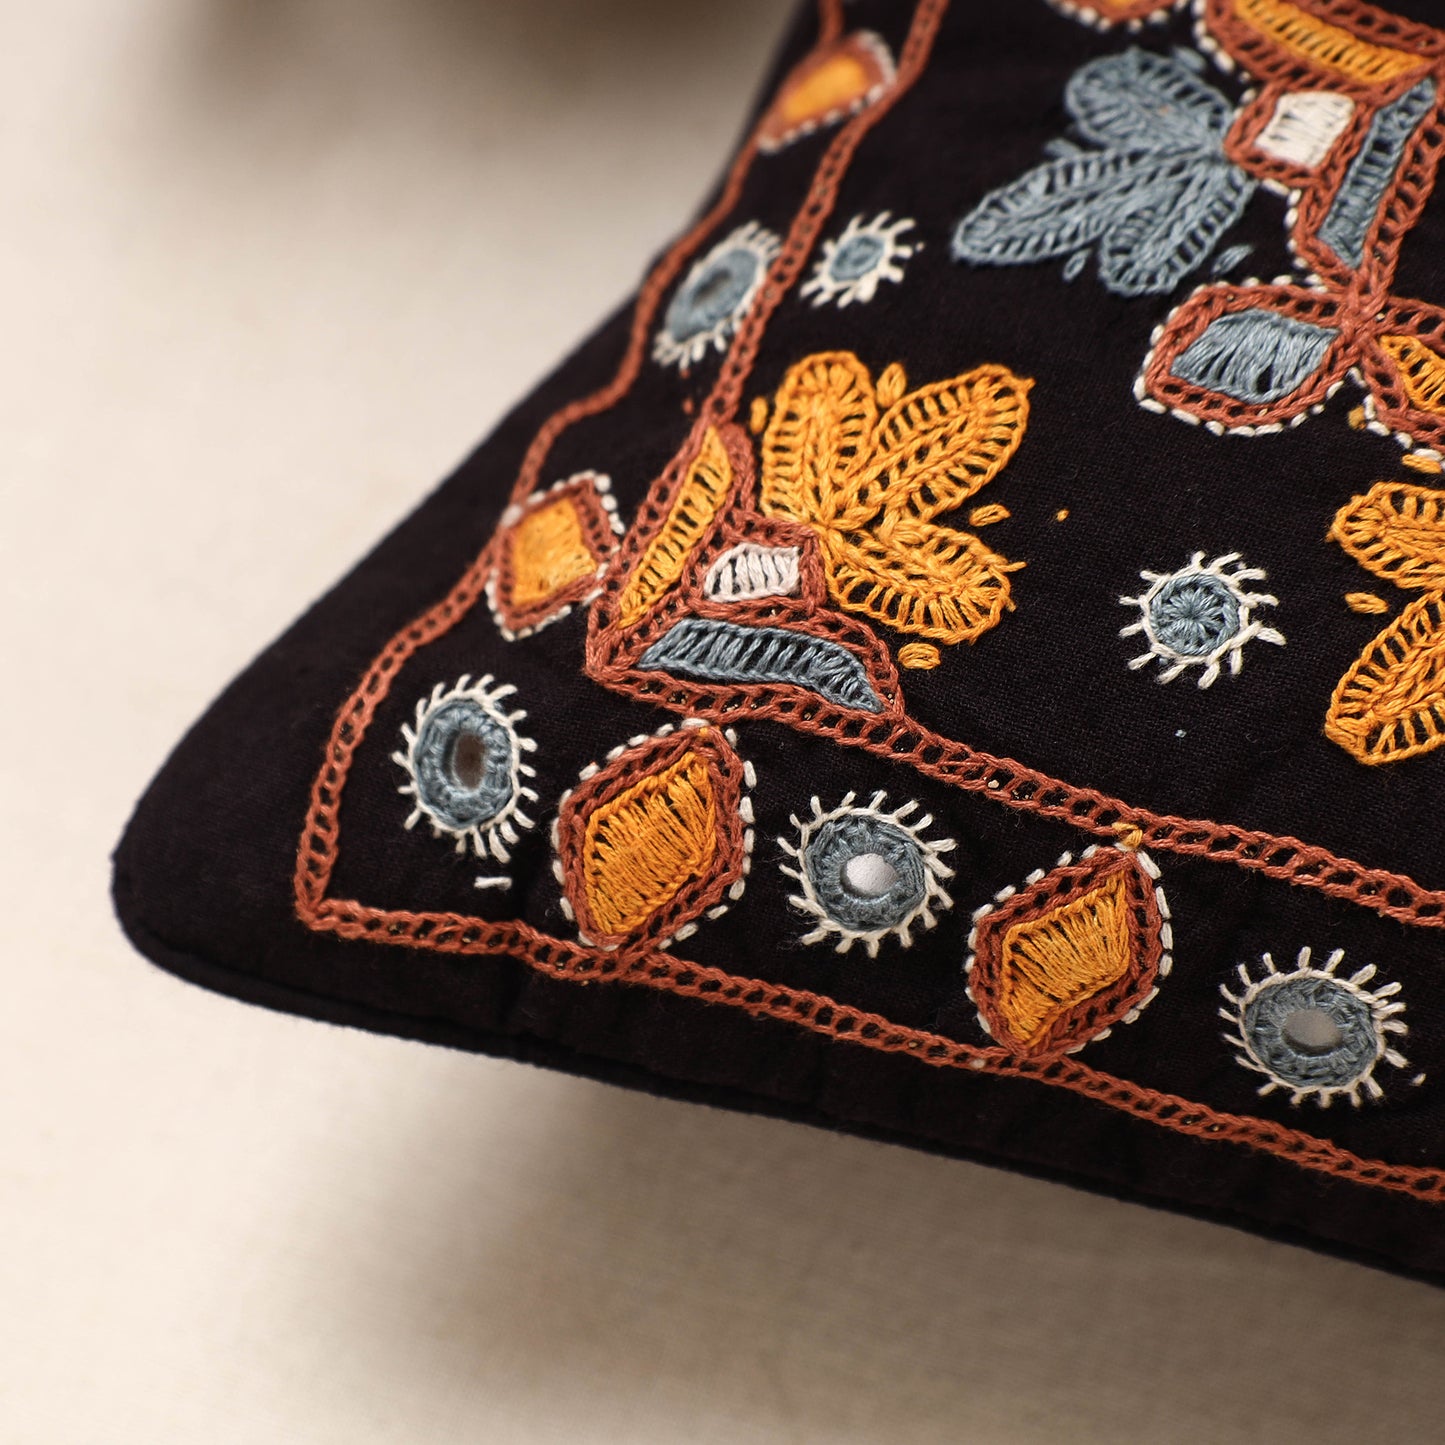 Pakko Embroidery Cushion Cover 